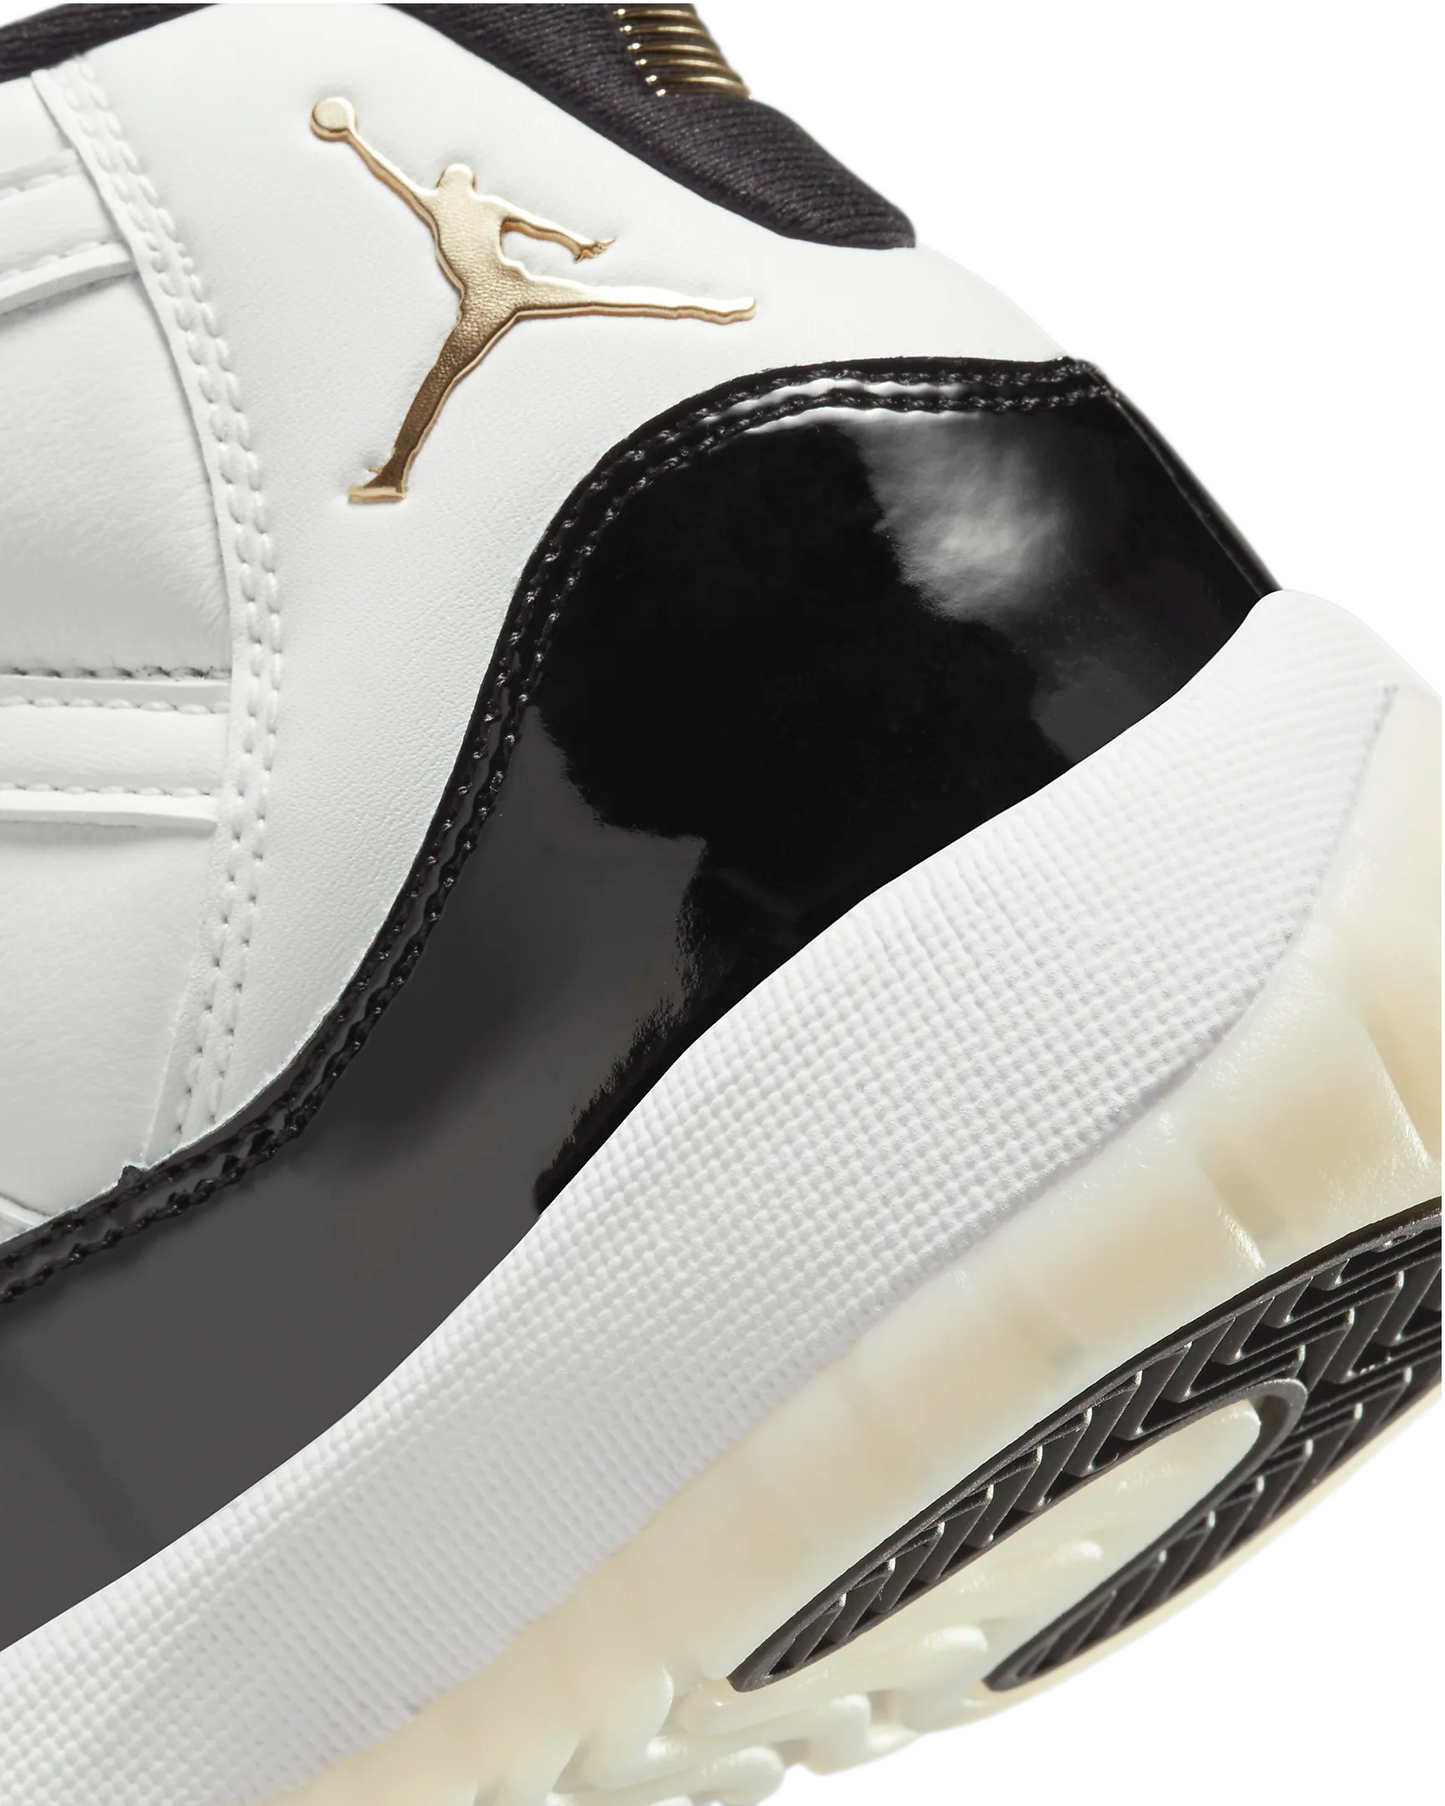 Air Jordan 11 Retro Grade School Sneaker White / Metallic Gold-Black 378038-170